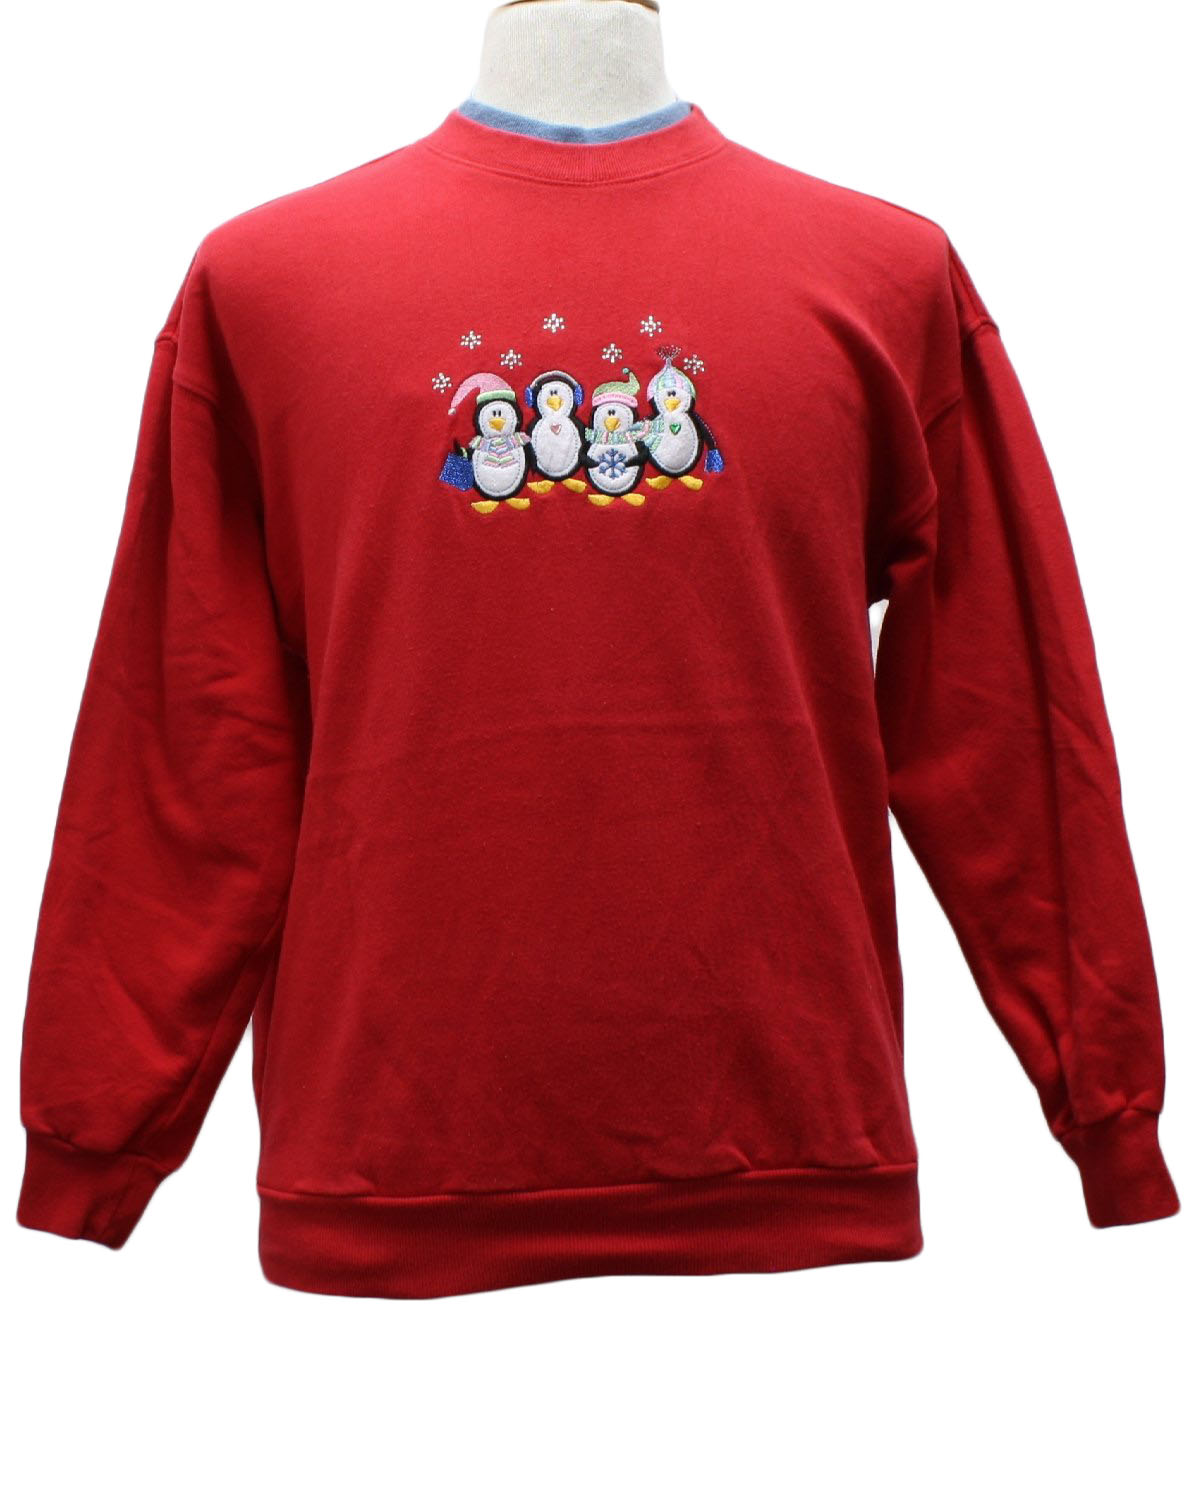 Ugly Christmas Sweatshirt: -MC Sportswear- Unisex Red background cotton ...